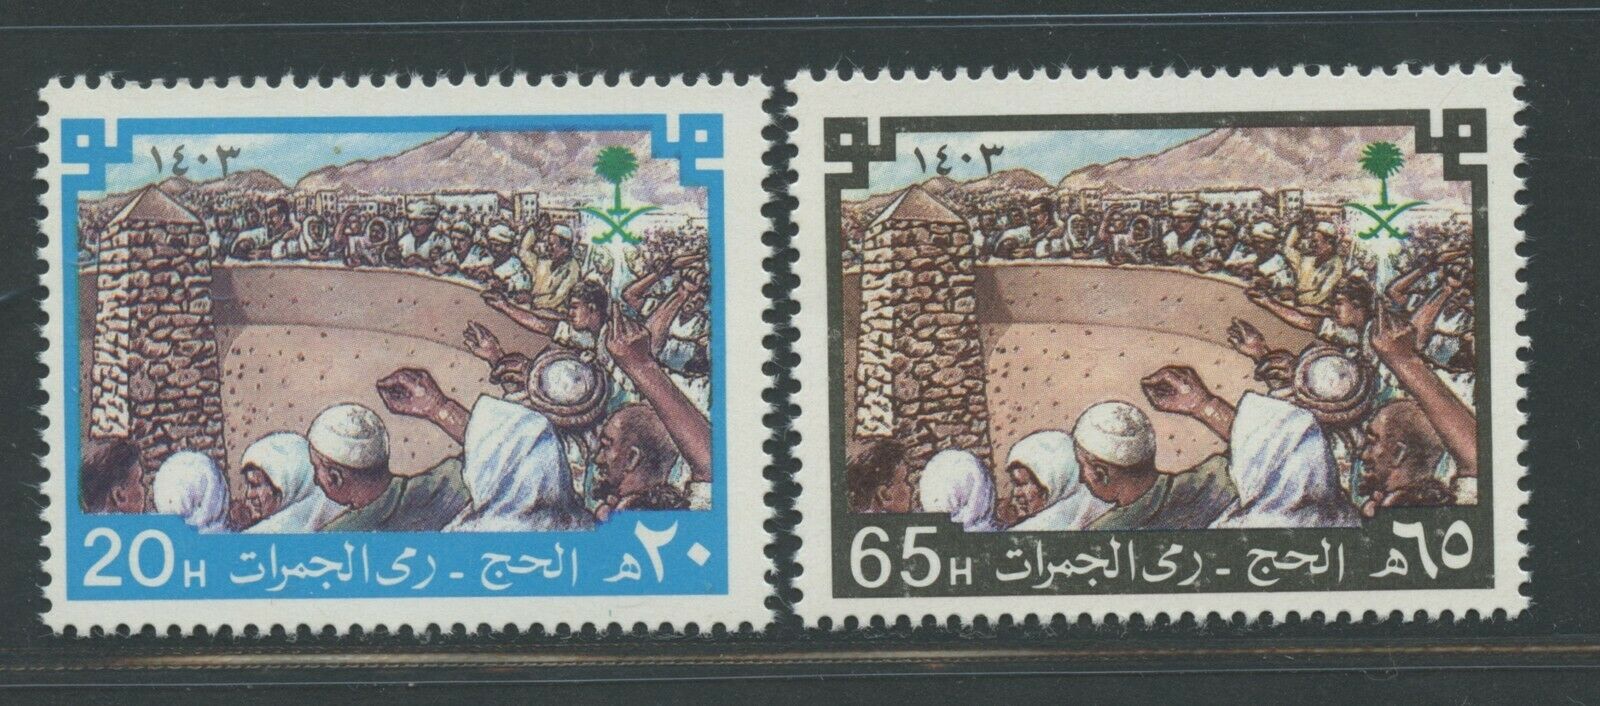 Saudi Arabia Scott# 867-868 Mint Never Hinged As Shown